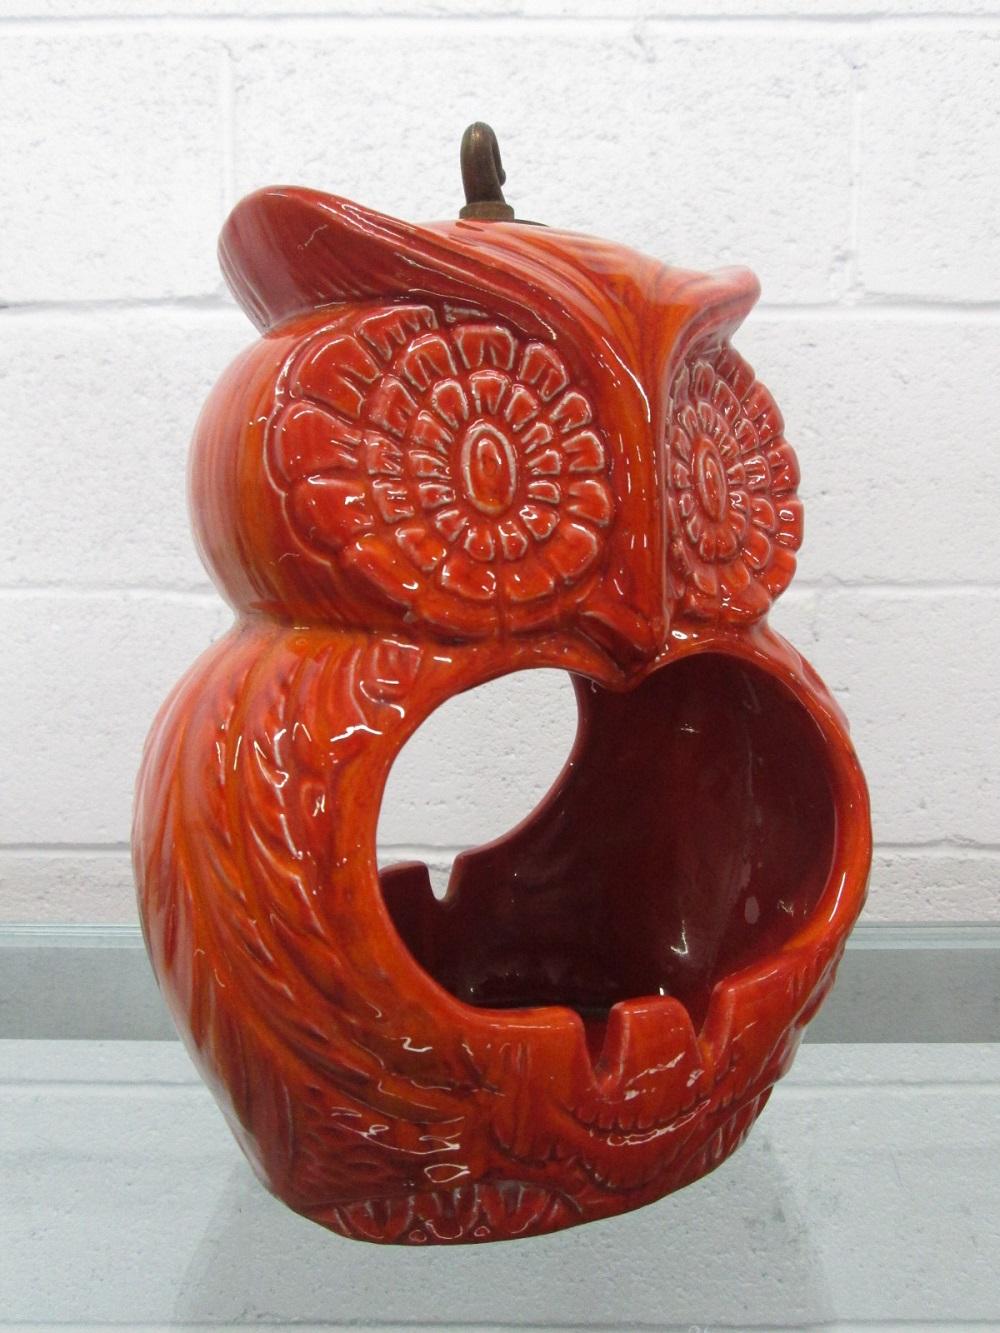 Mid-Century Modern ceramic hanging owl ashtray. Nice vibrant orange ceramic color.
   